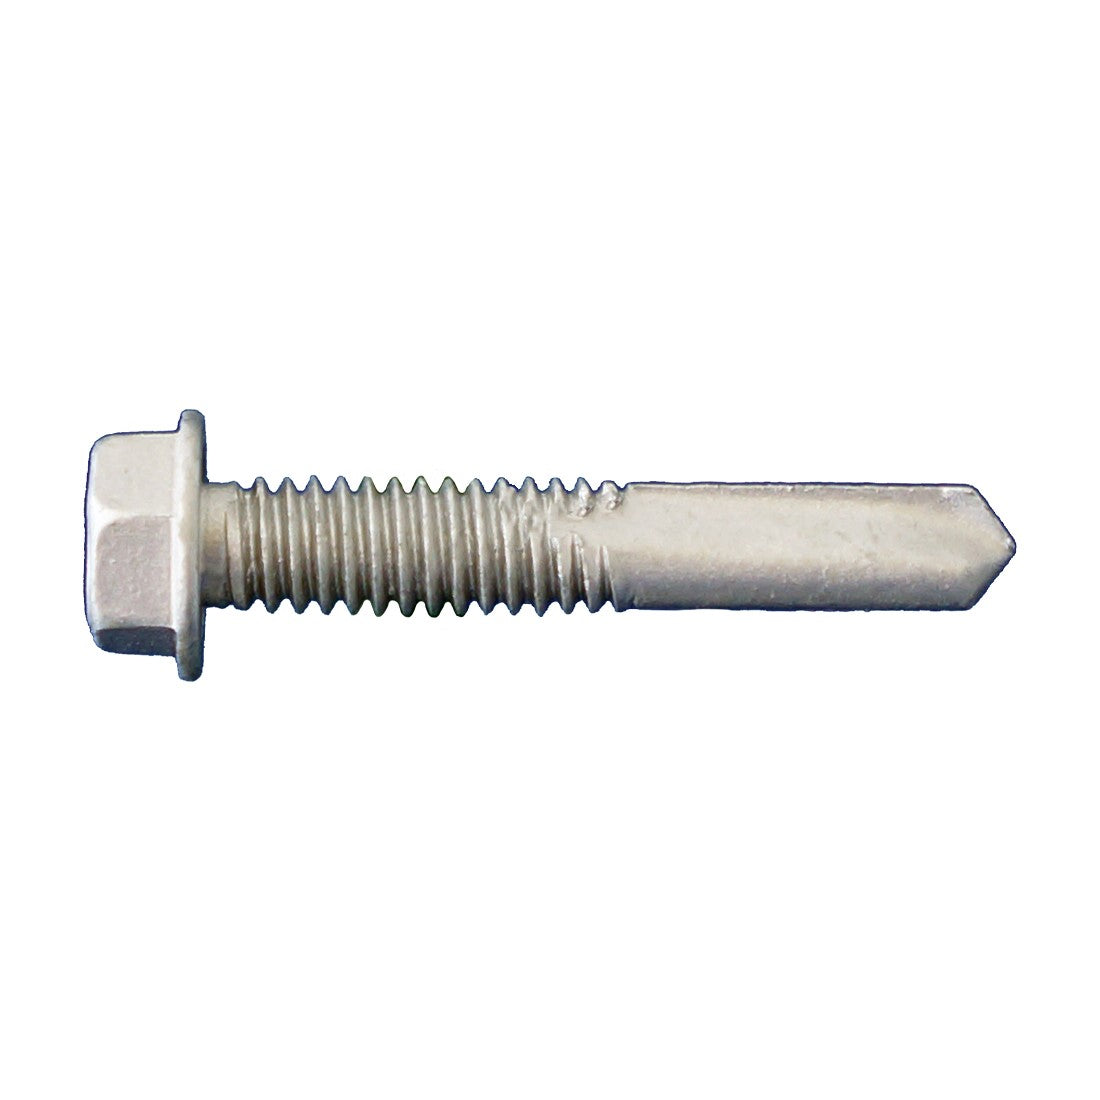 14 inch20 x 2 inch SelfDrilling Metal Screw w#5 Point Hex Head DaggerGuard Coating Pkg 1500